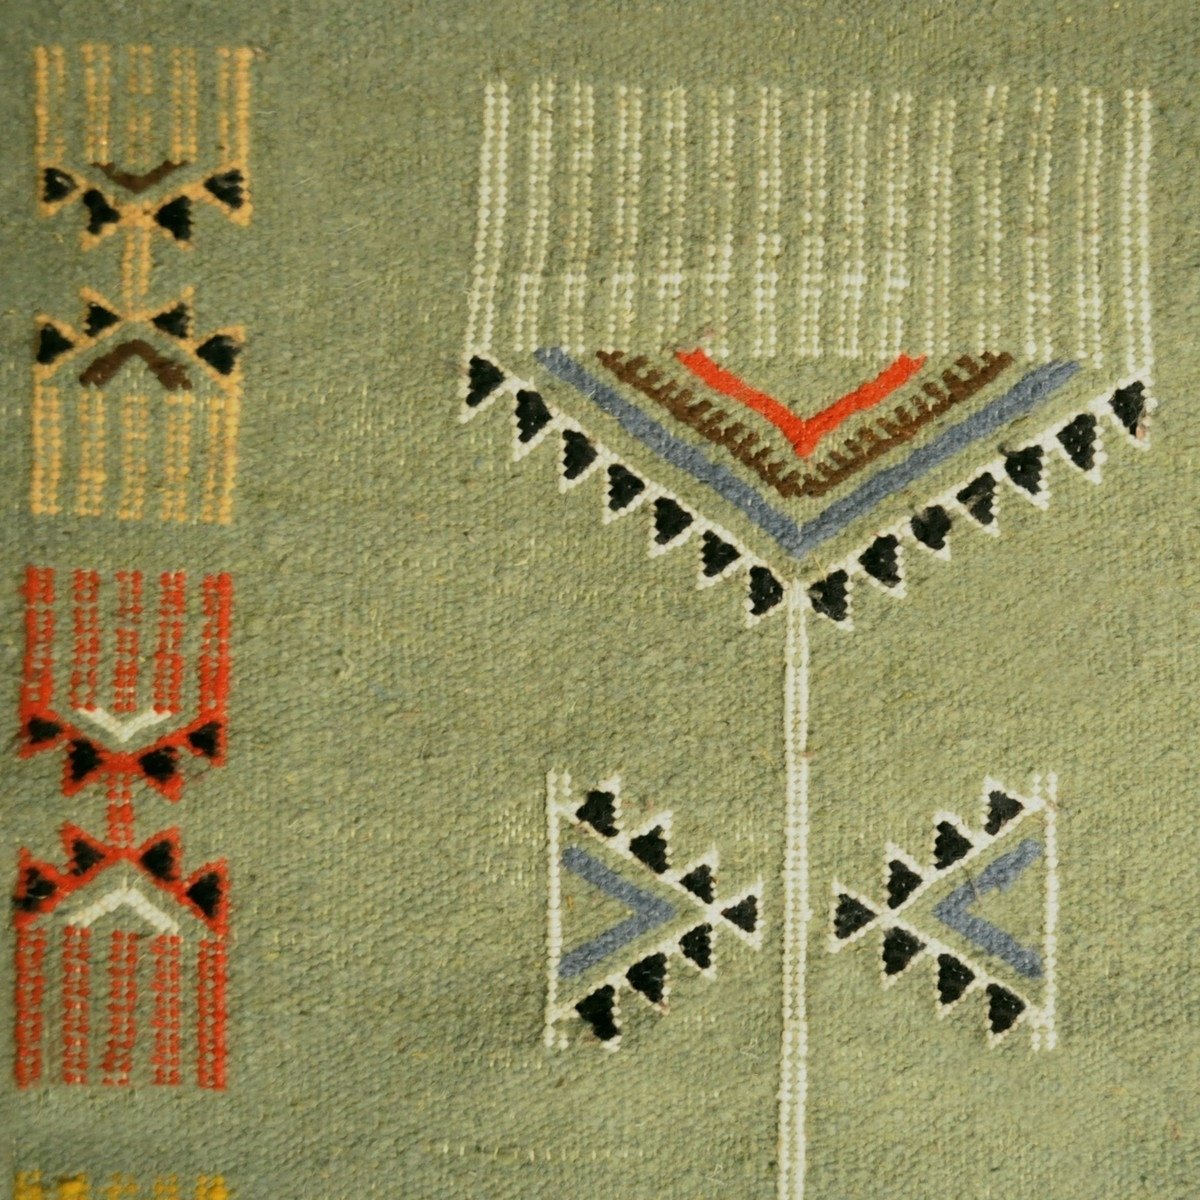 Berber tapijt Tapijt Kilim lang Zramdine 60x190 Groen/Veelkleurig (Handgeweven, Wol, Tunesië) Tunesisch kilimdeken, Marokkaanse 